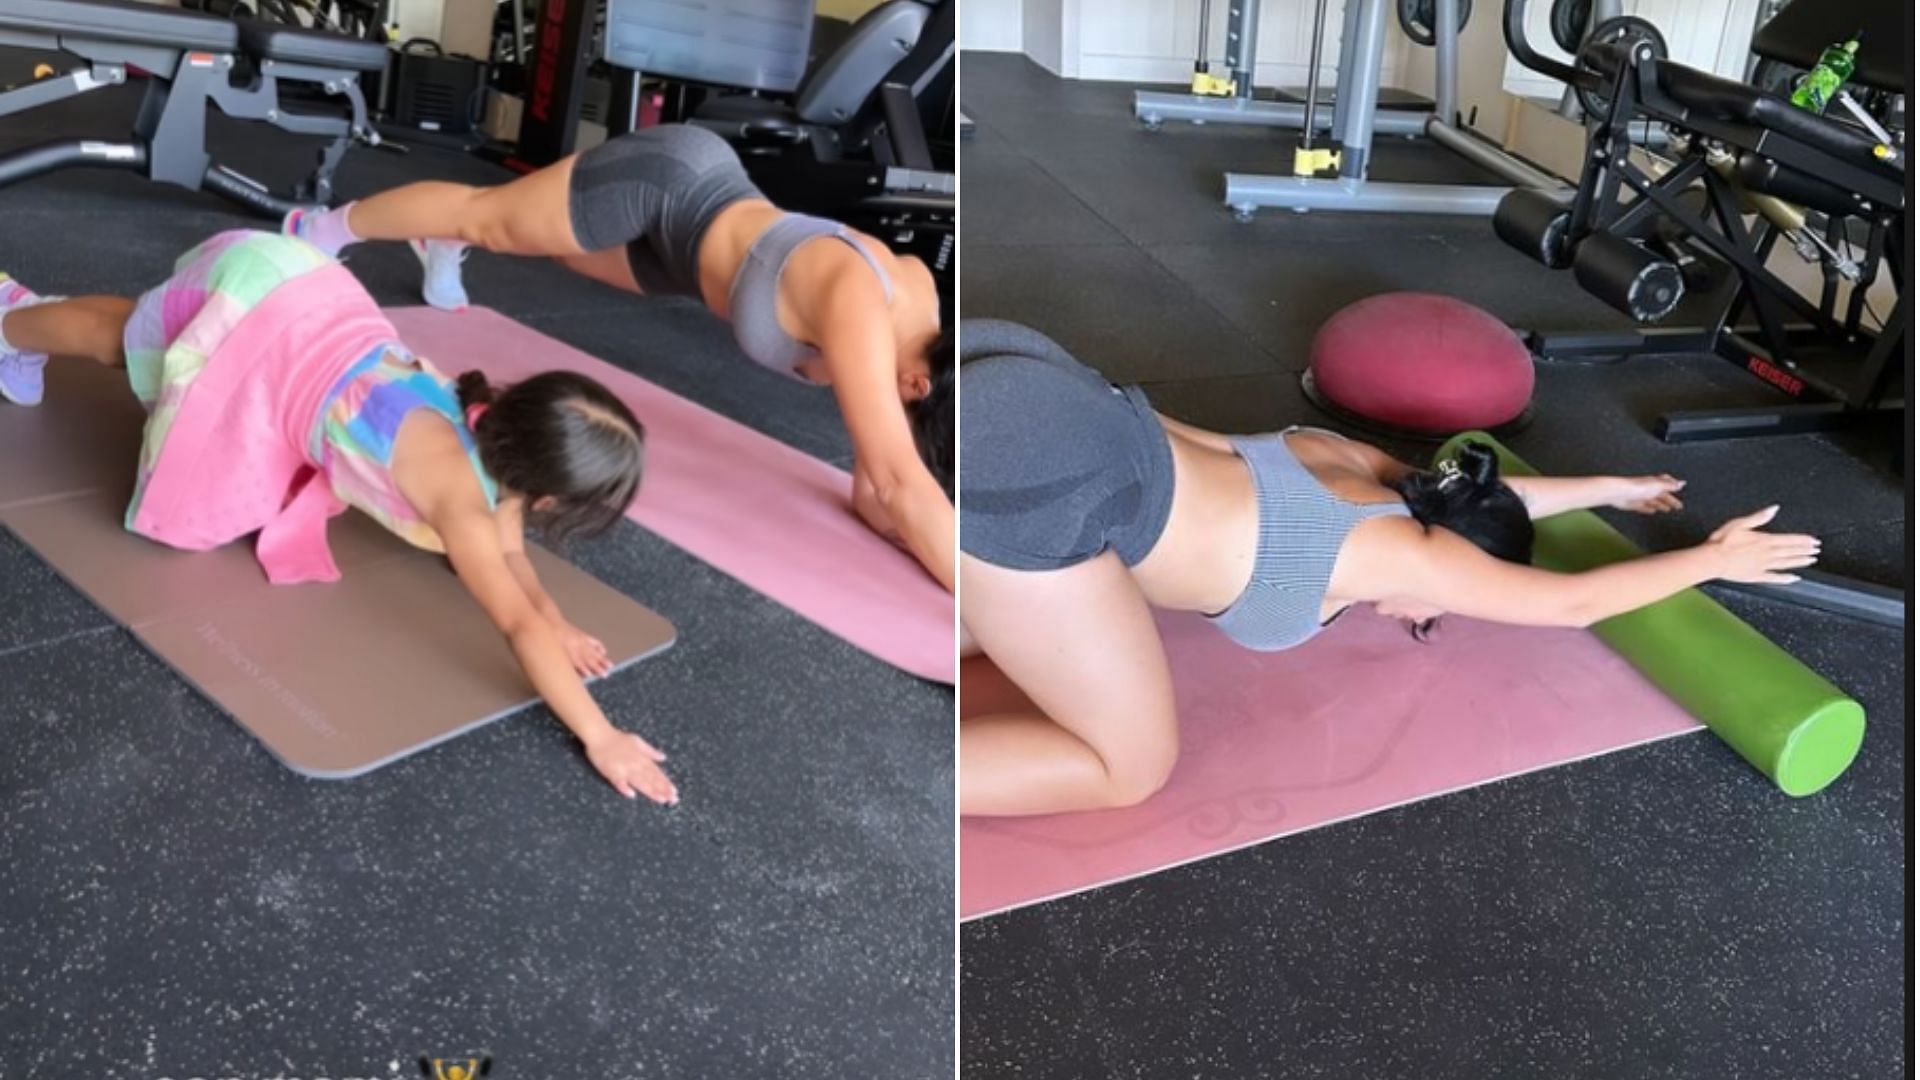 Georgina Rodríguez on Instagram: “Love finishing my workout